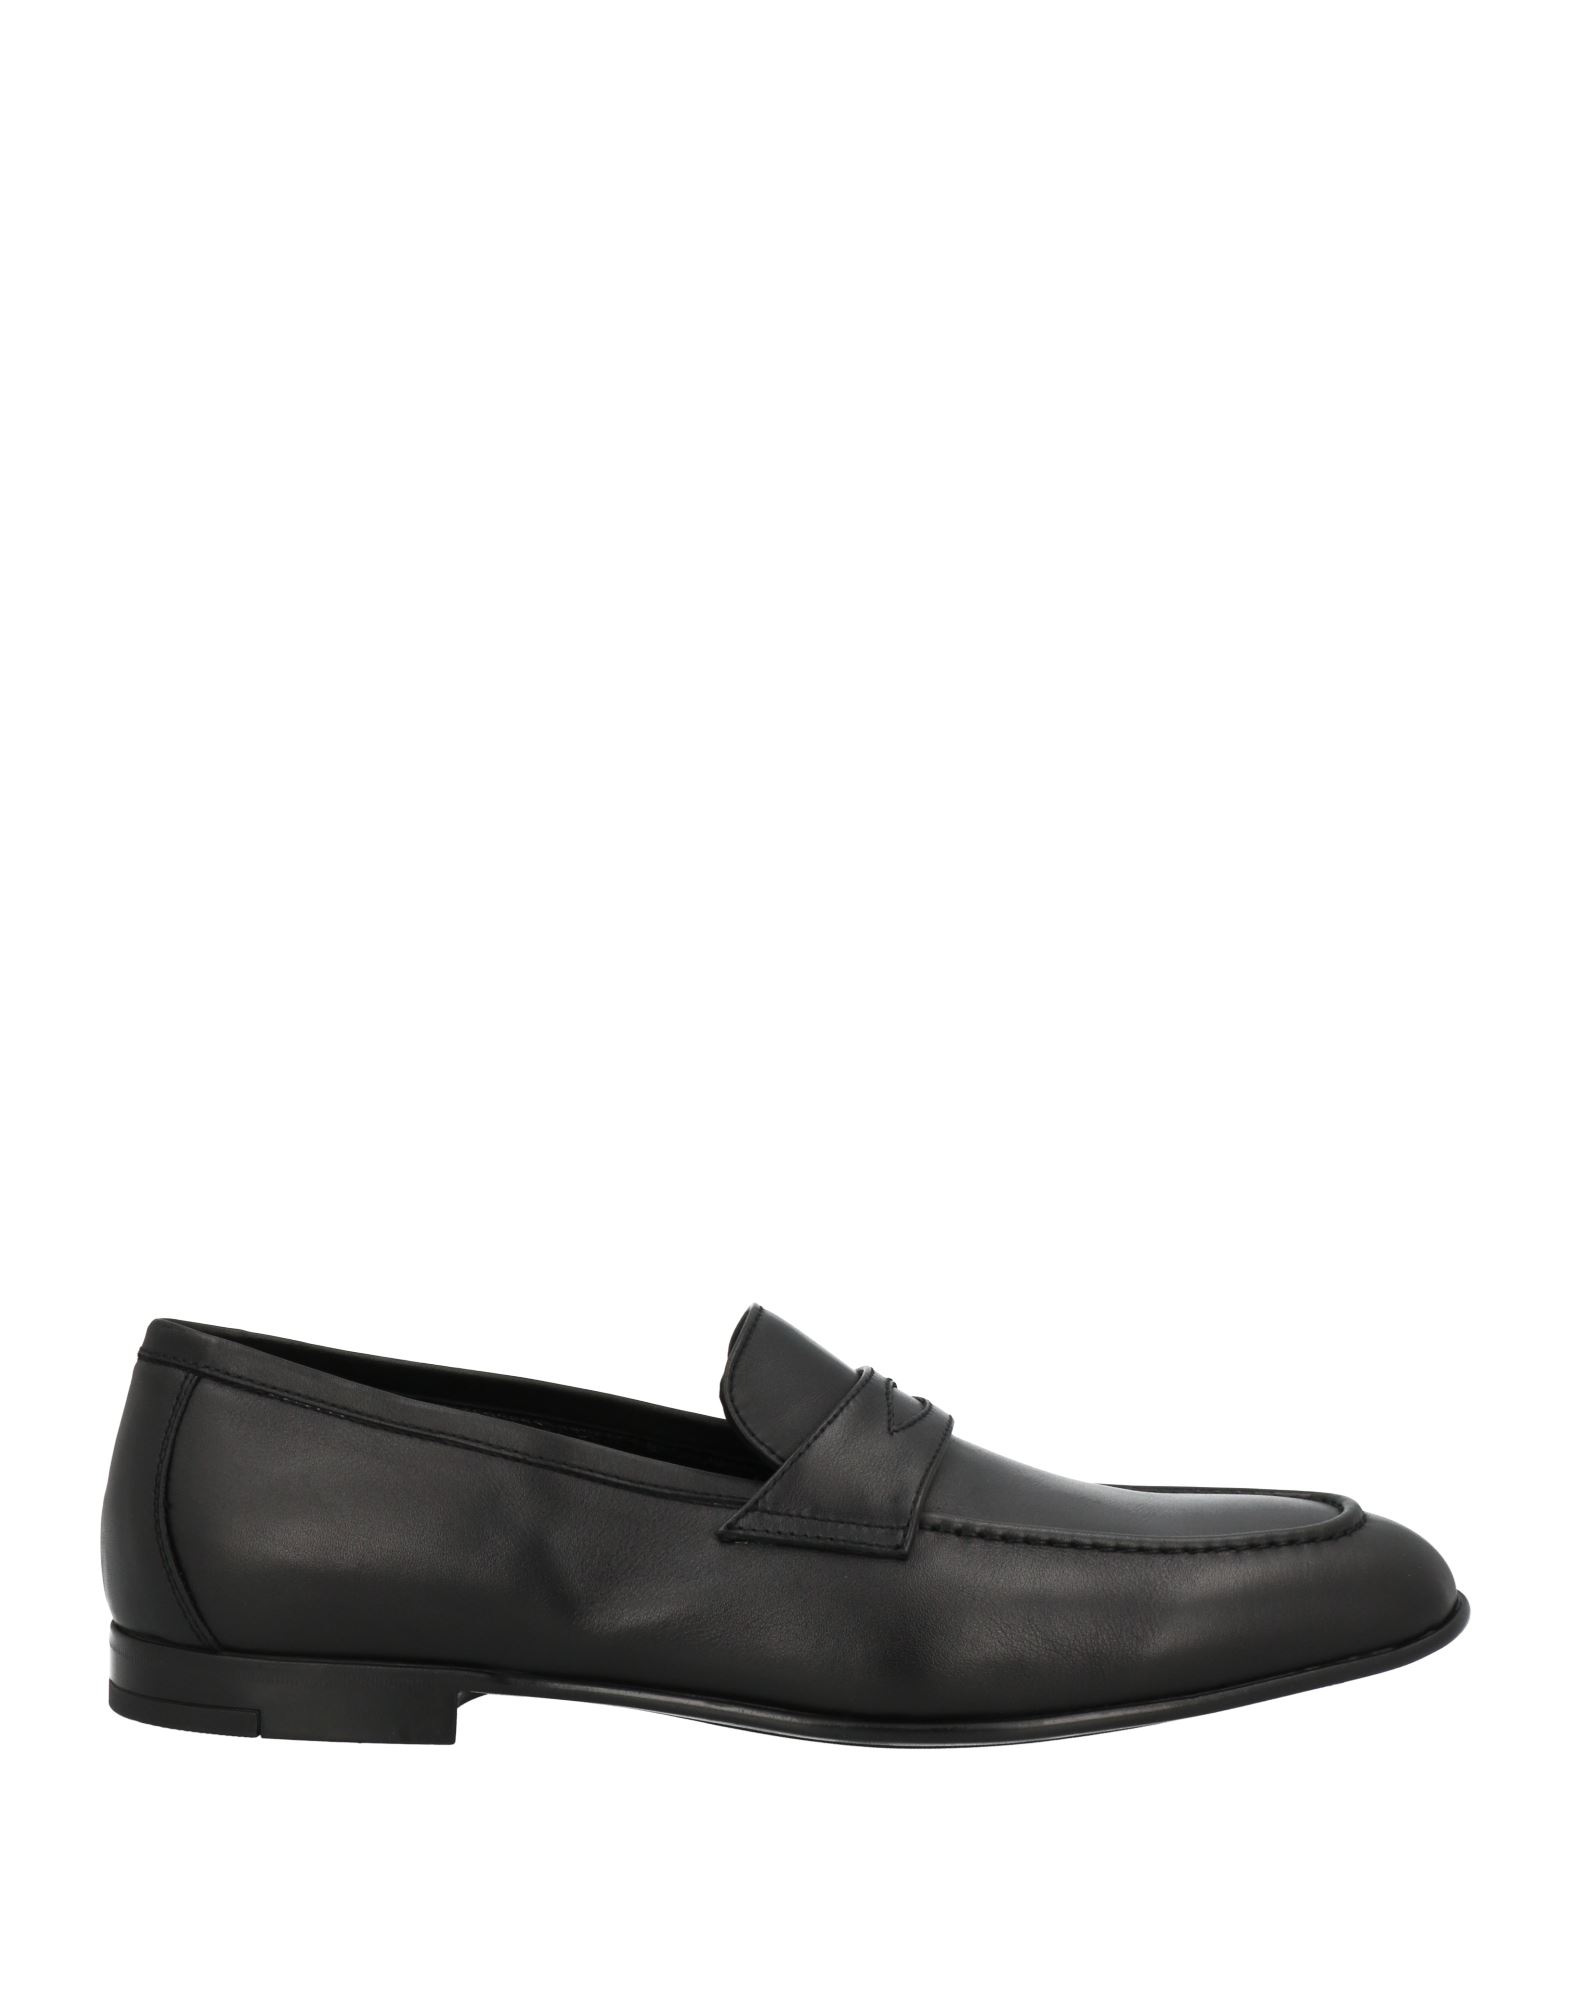 Doucal's Man Loafers Black Size 10 Calfskin